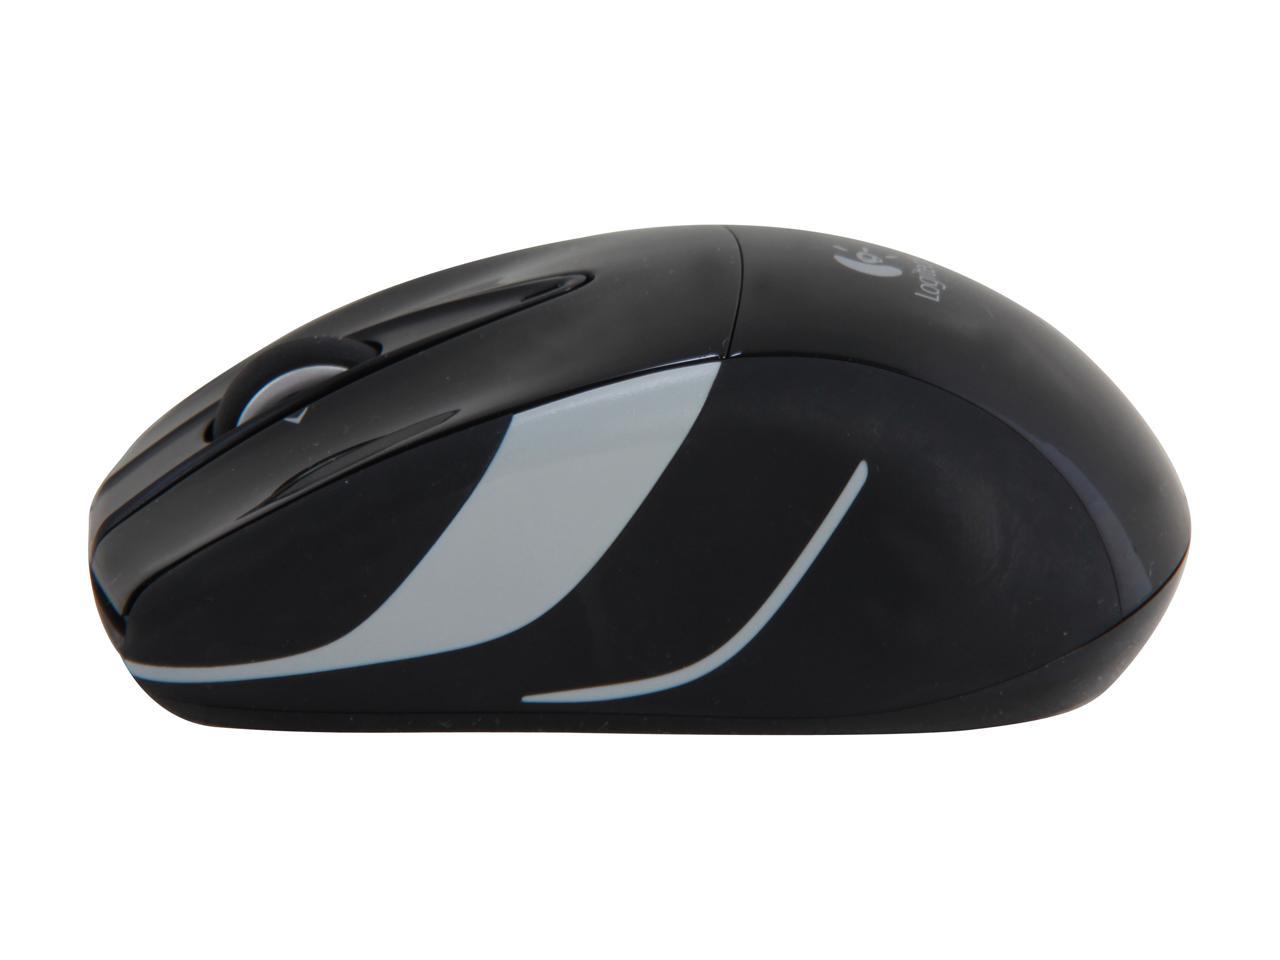 Logitech Wireless Mouse M525 - Black/Grey